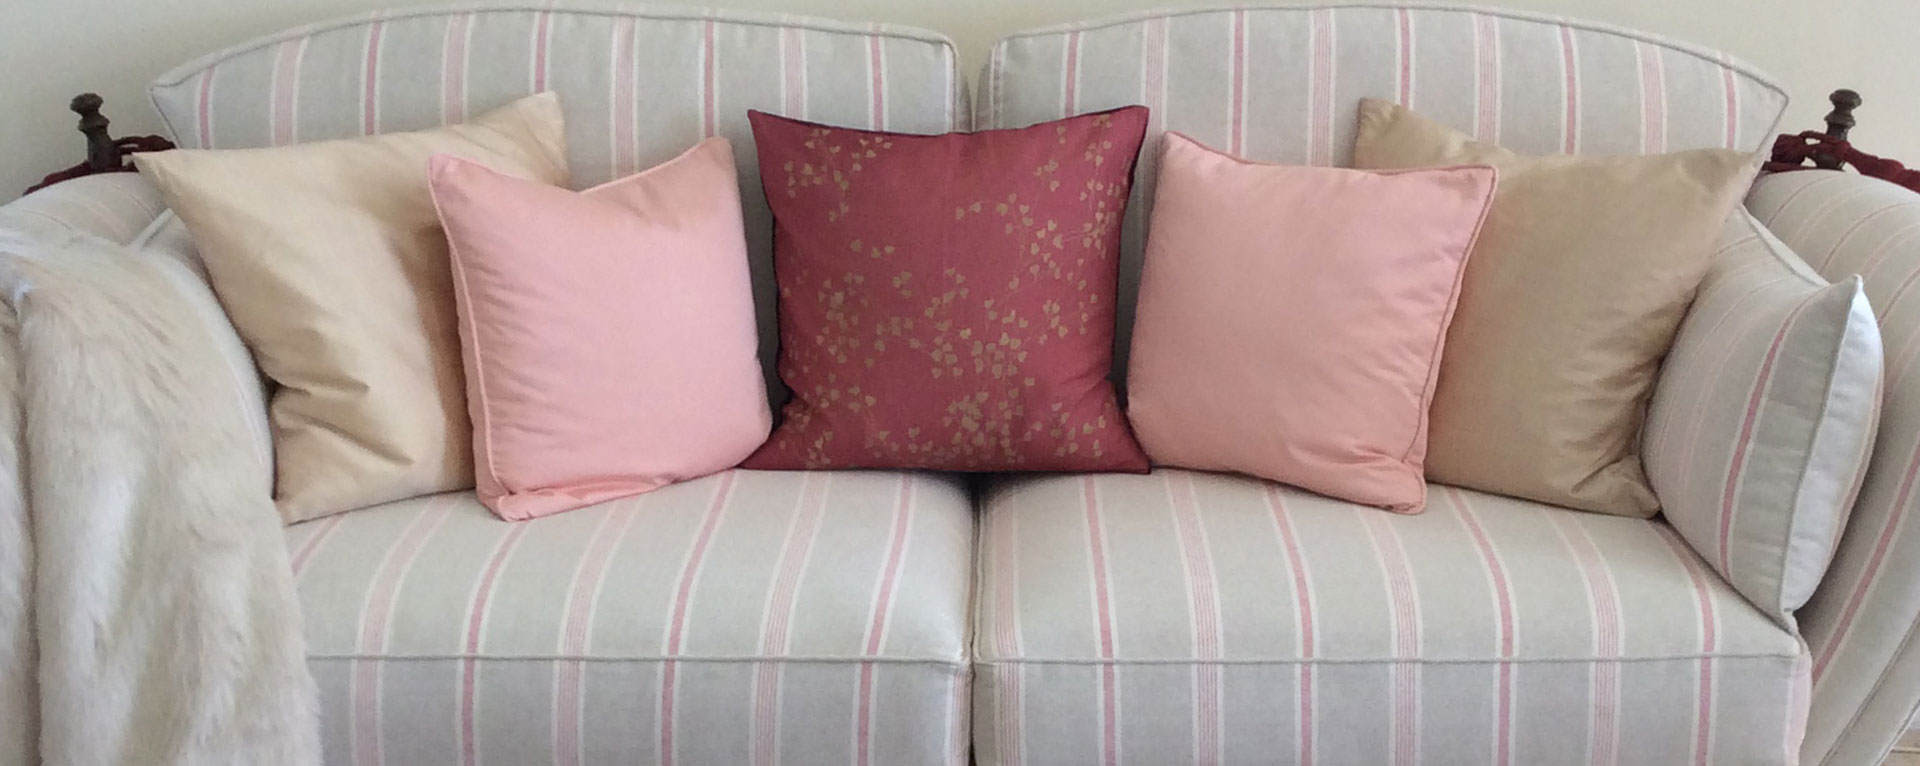 Replacement Sofa Cushions - Buy Foam Cushions Online